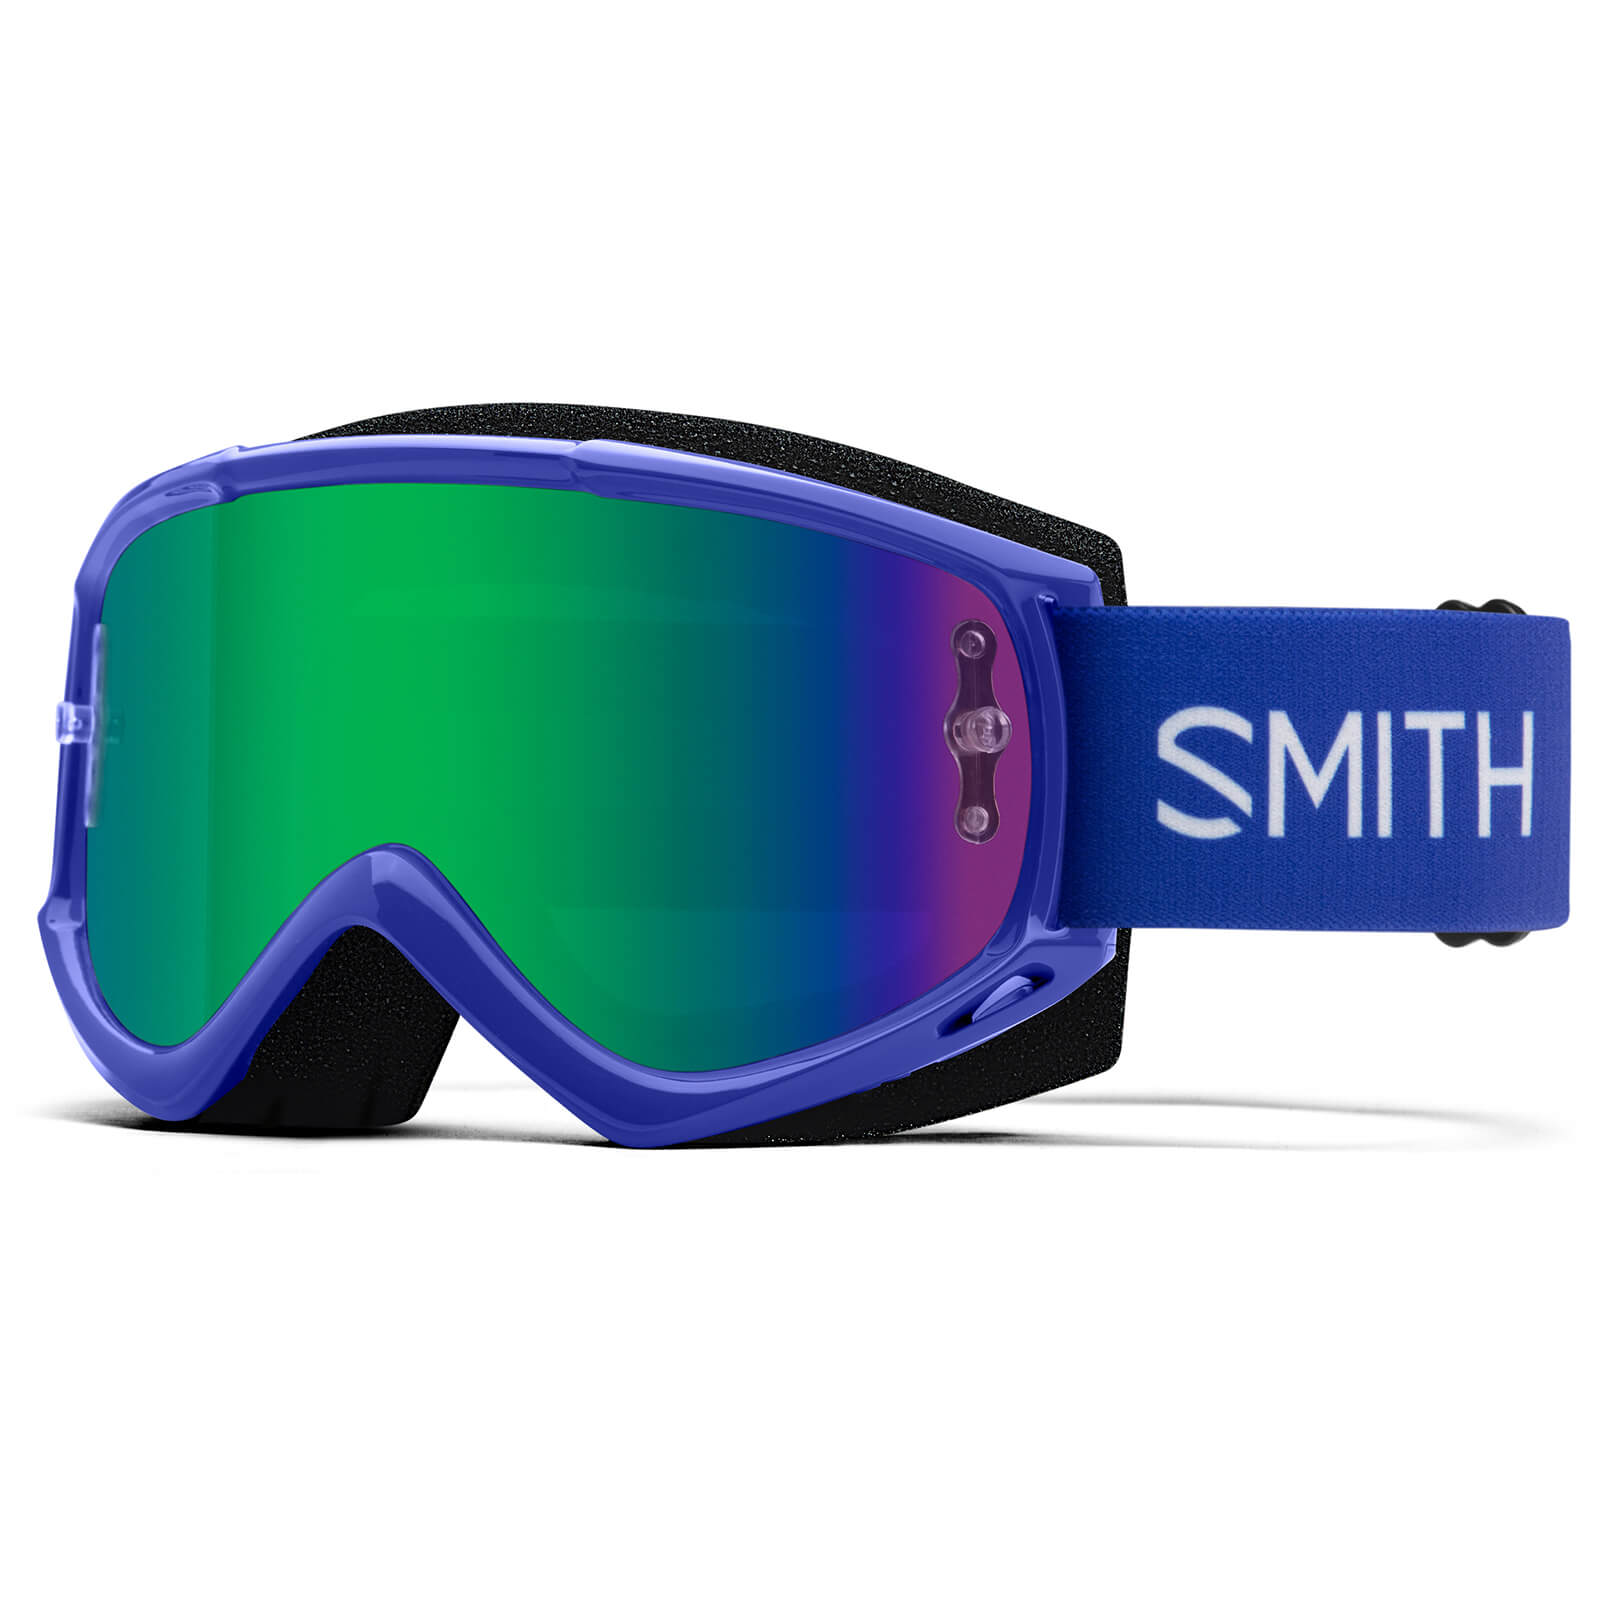 Smith Fuel V1 MTB Goggles - Green Mirror Lens - Klein Blue